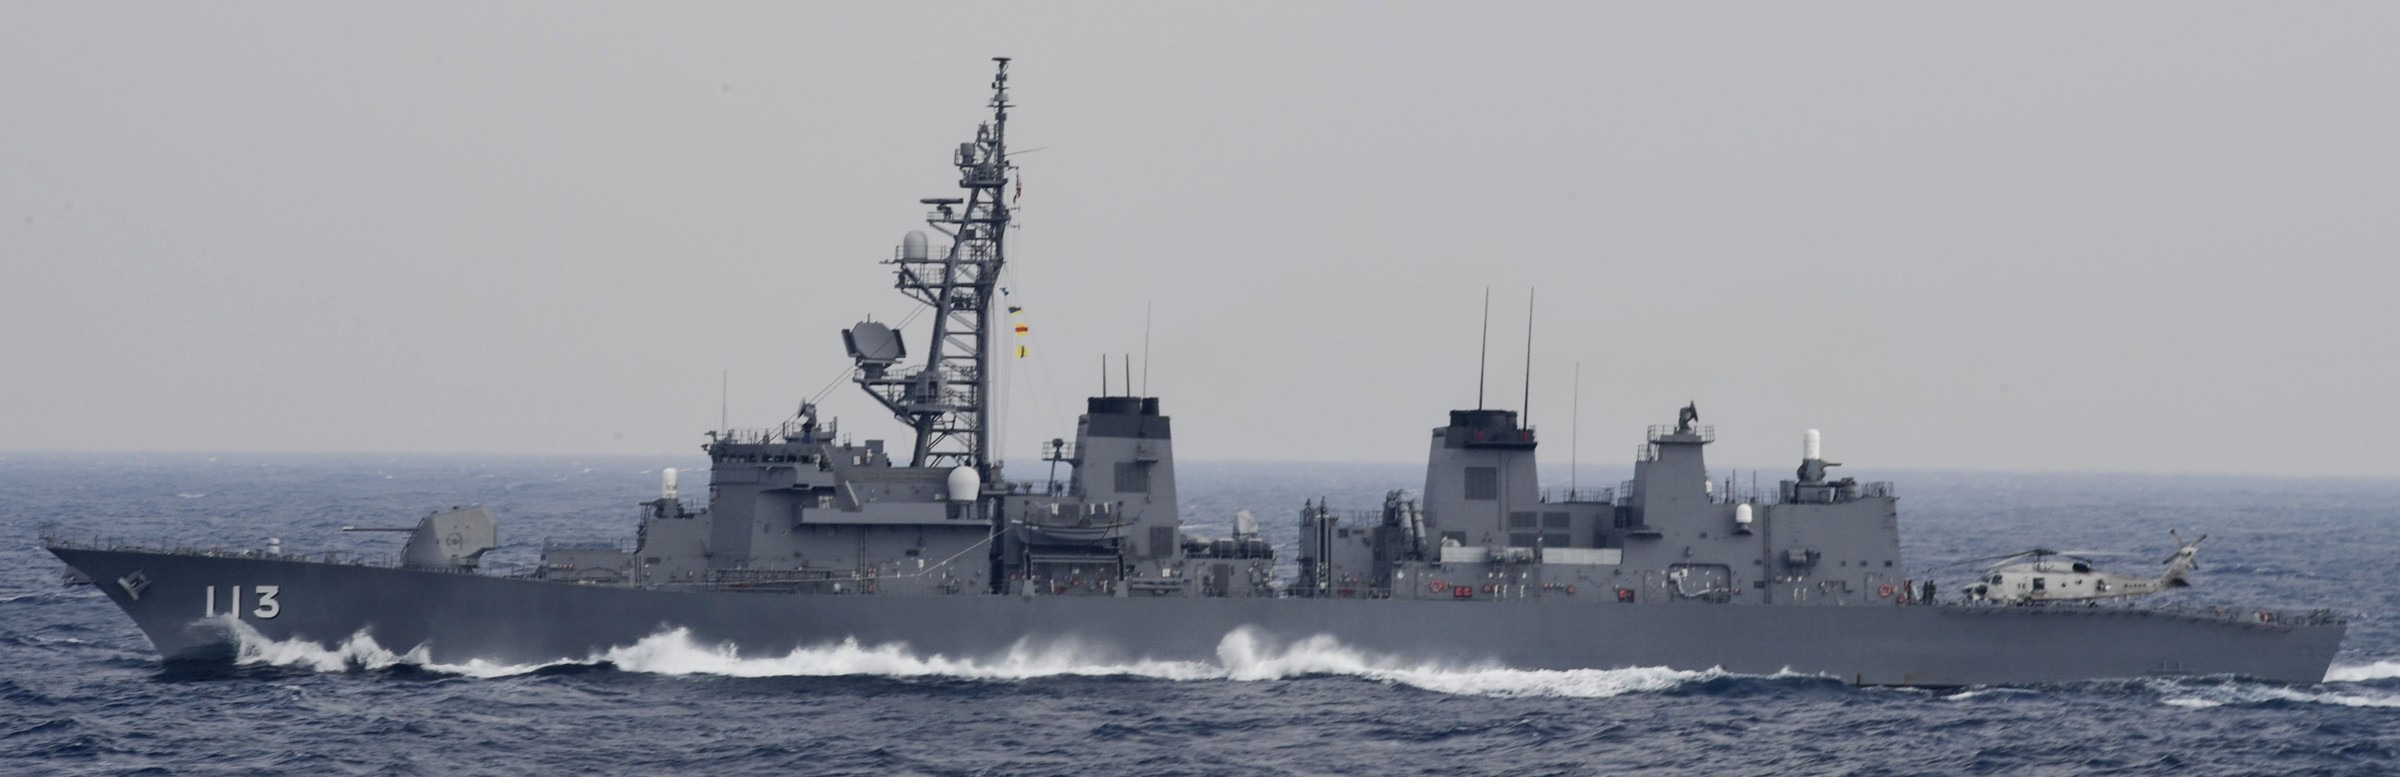 dd-113 js sazanami takanami class destroyer japan maritime self defense force jmsdf 25